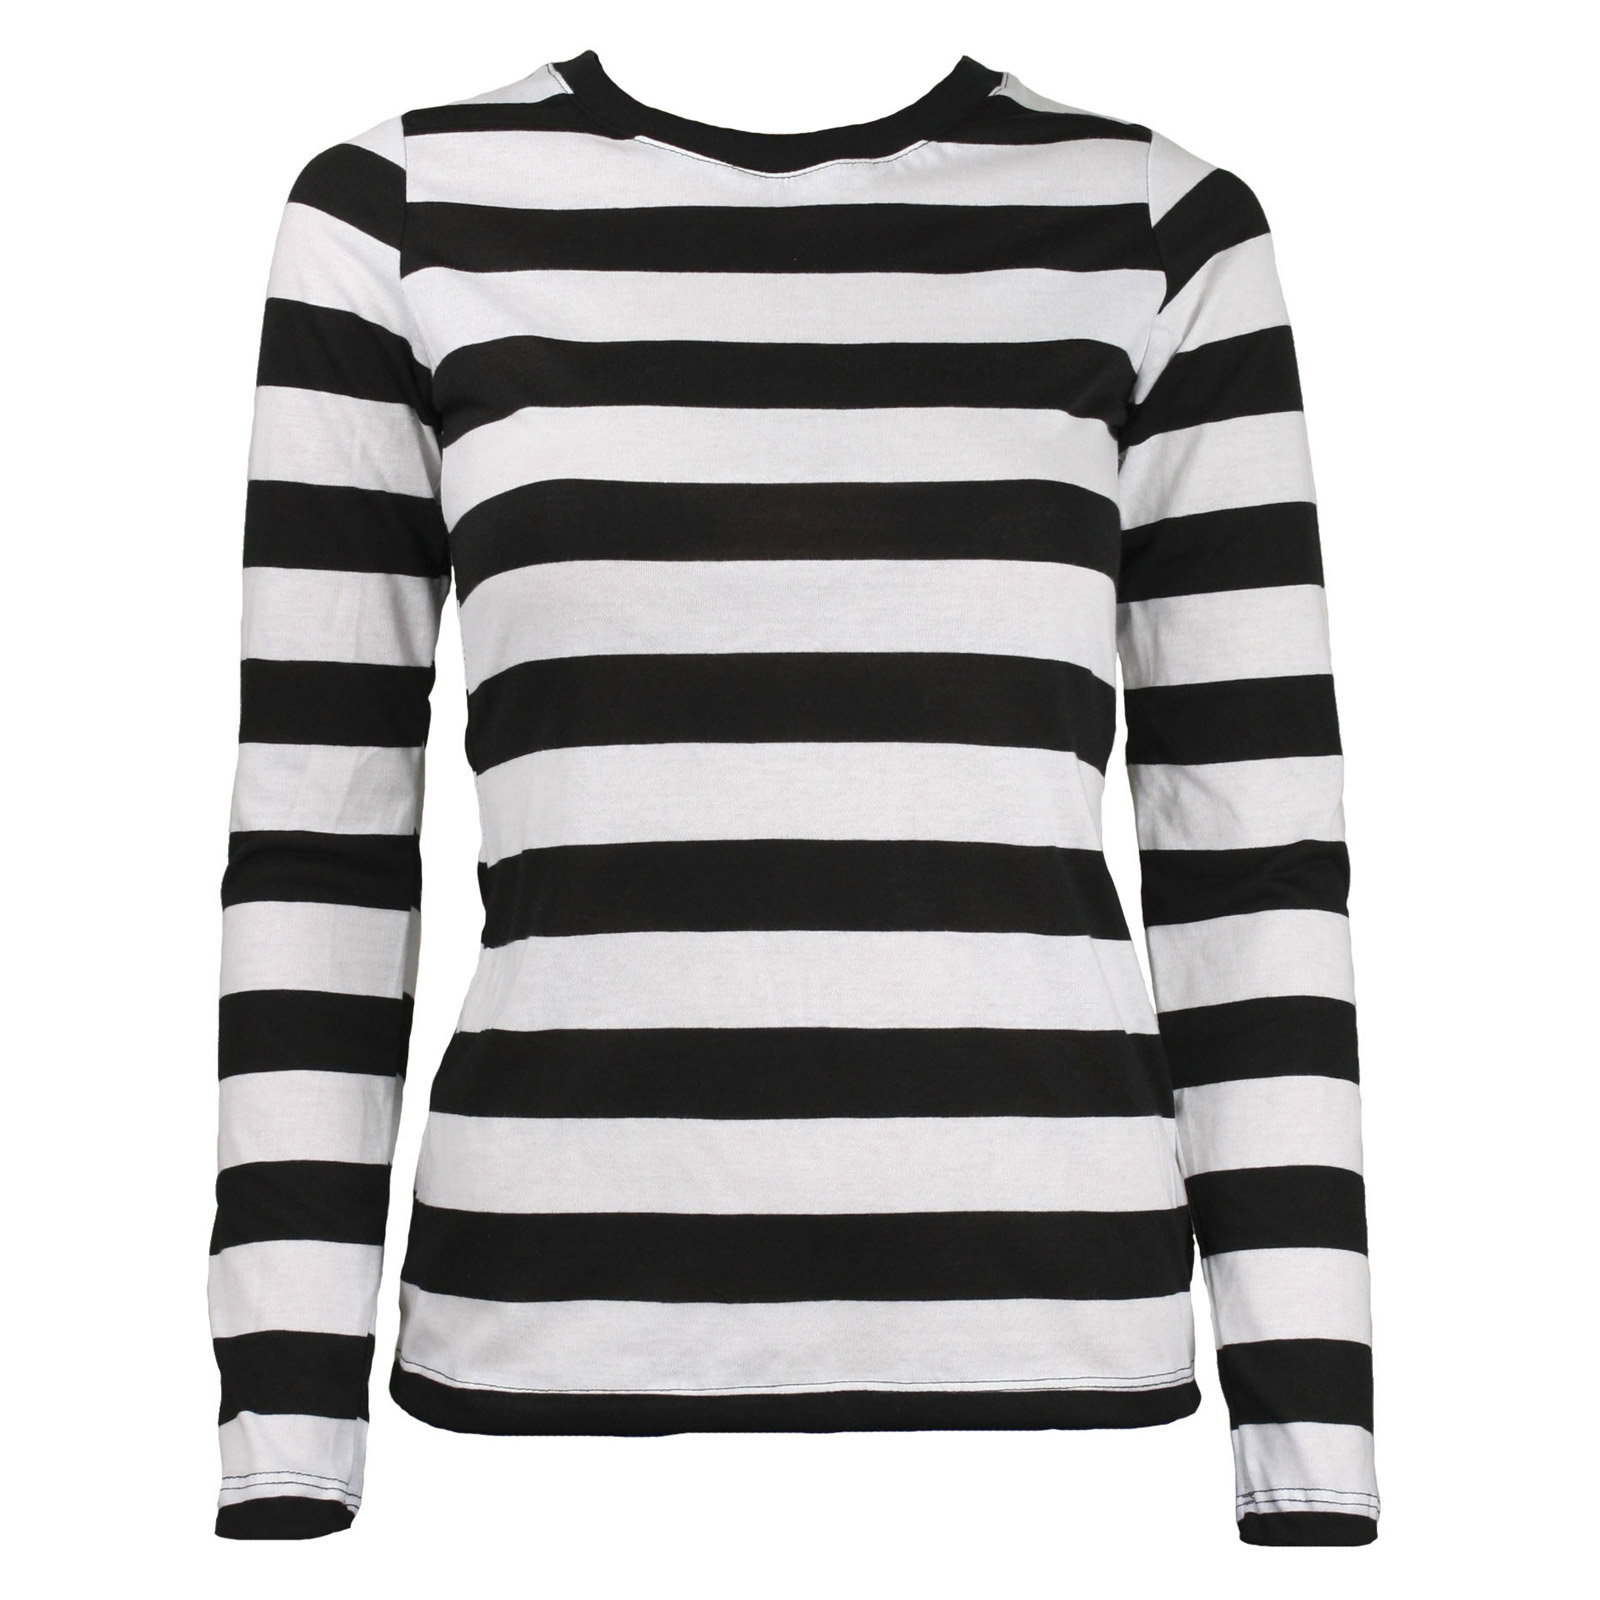 Black White Striped Shirt Women's - Image Result For Black And White ...